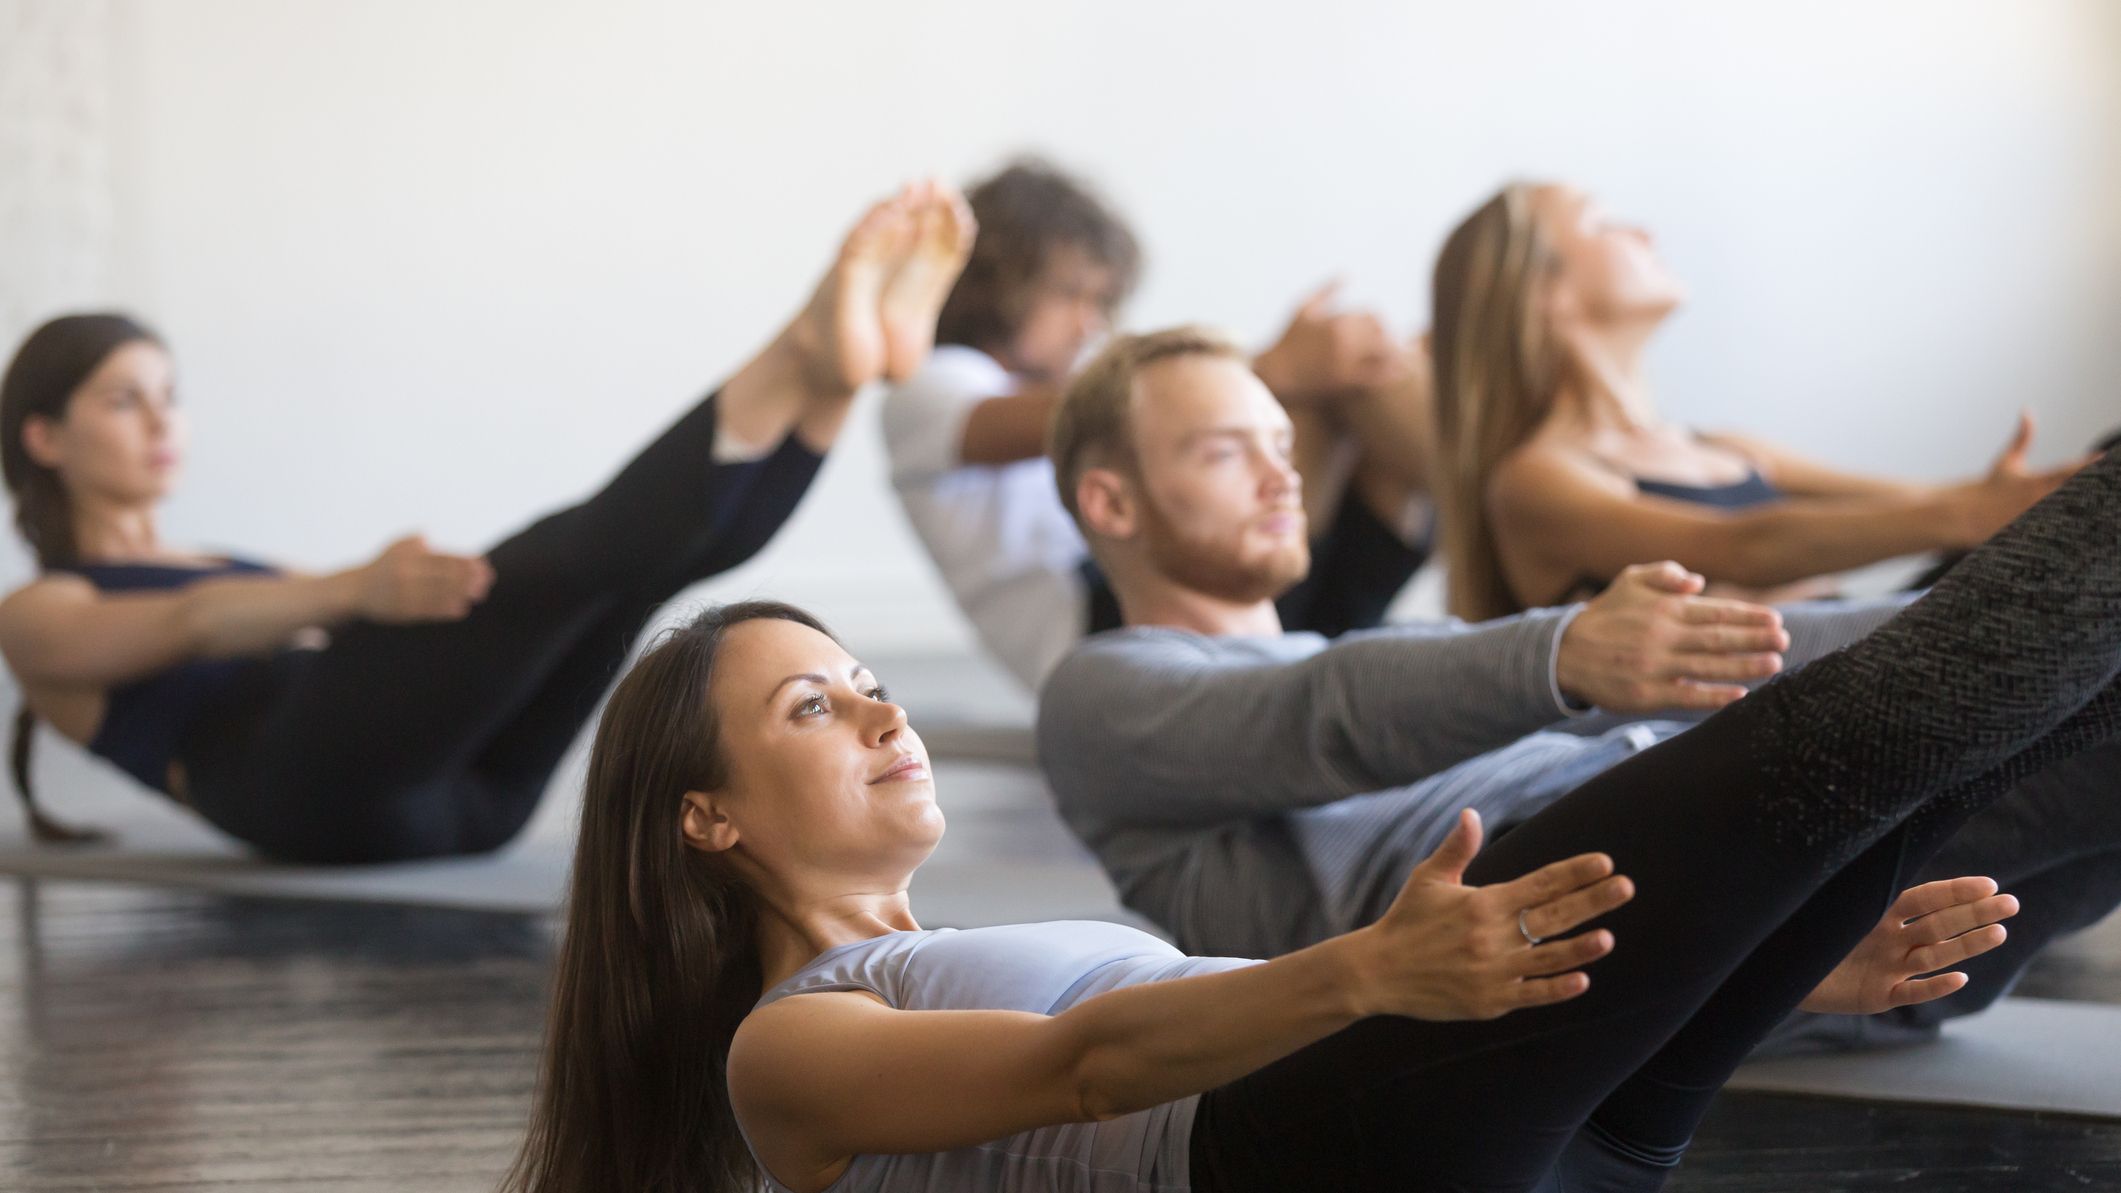 Best Yoga Pilates Workout Video